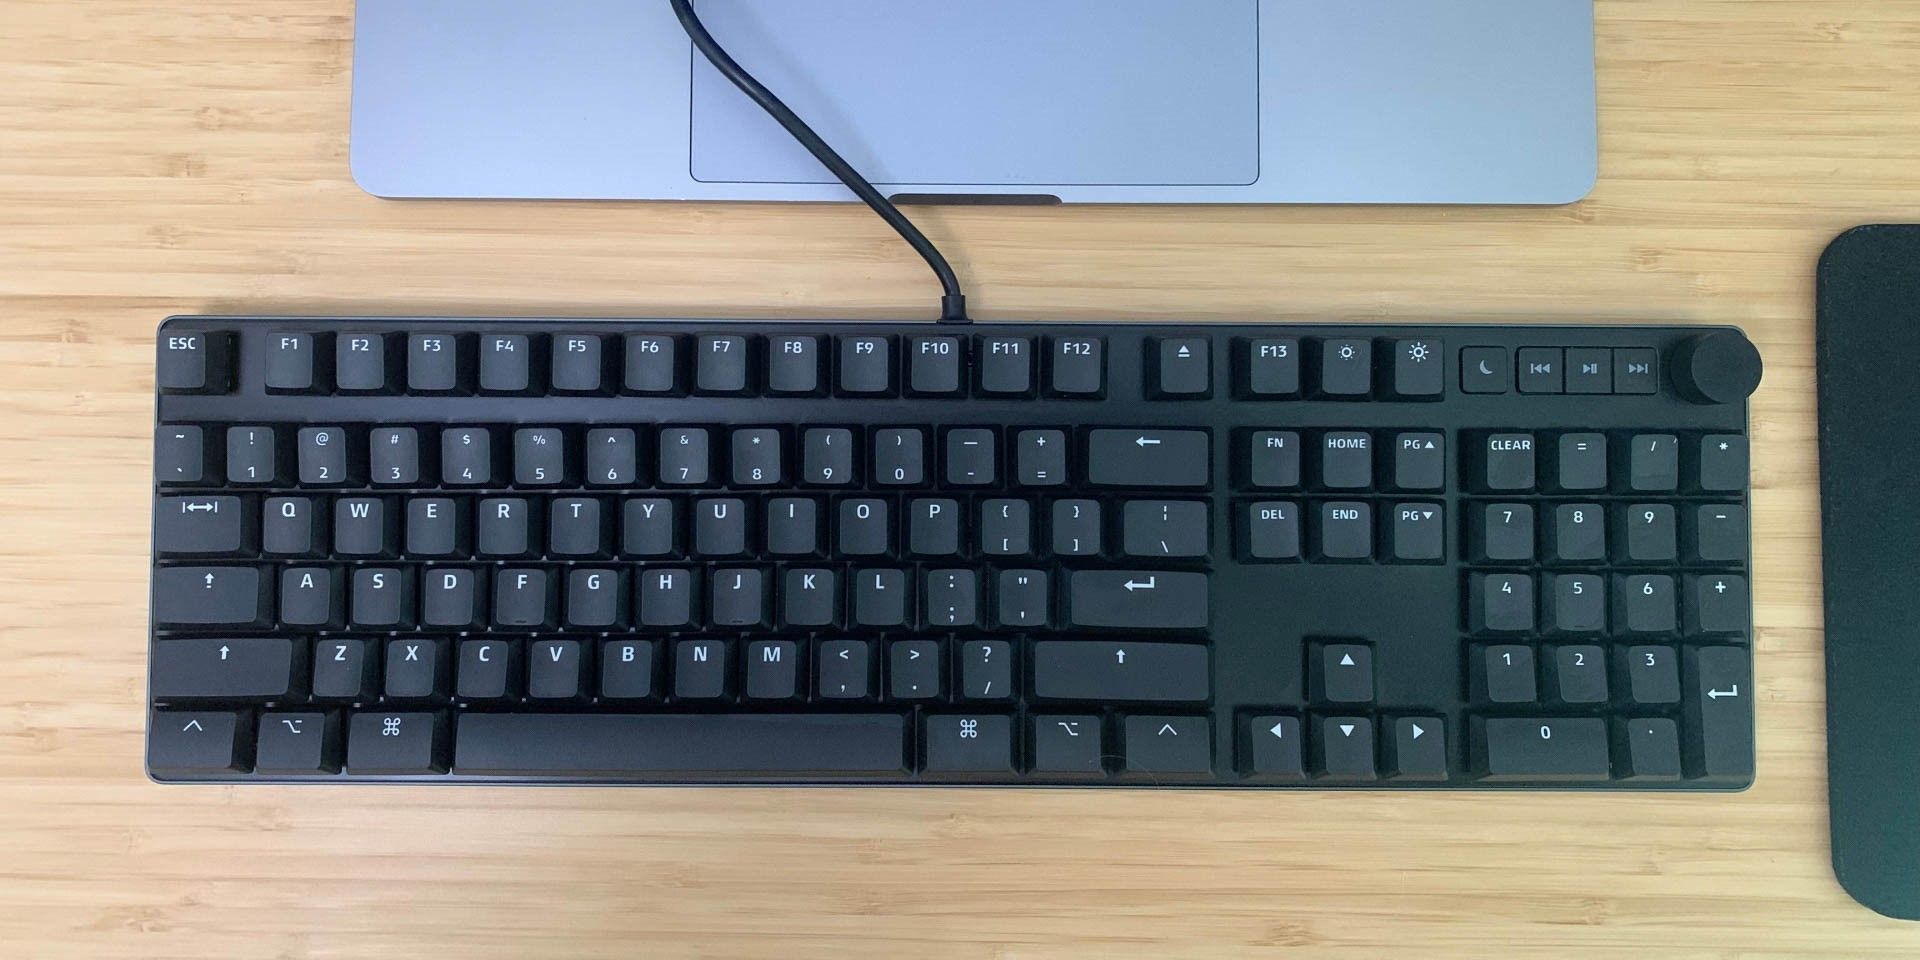 MacTigr keyboard on desk in front of MacBook Pro